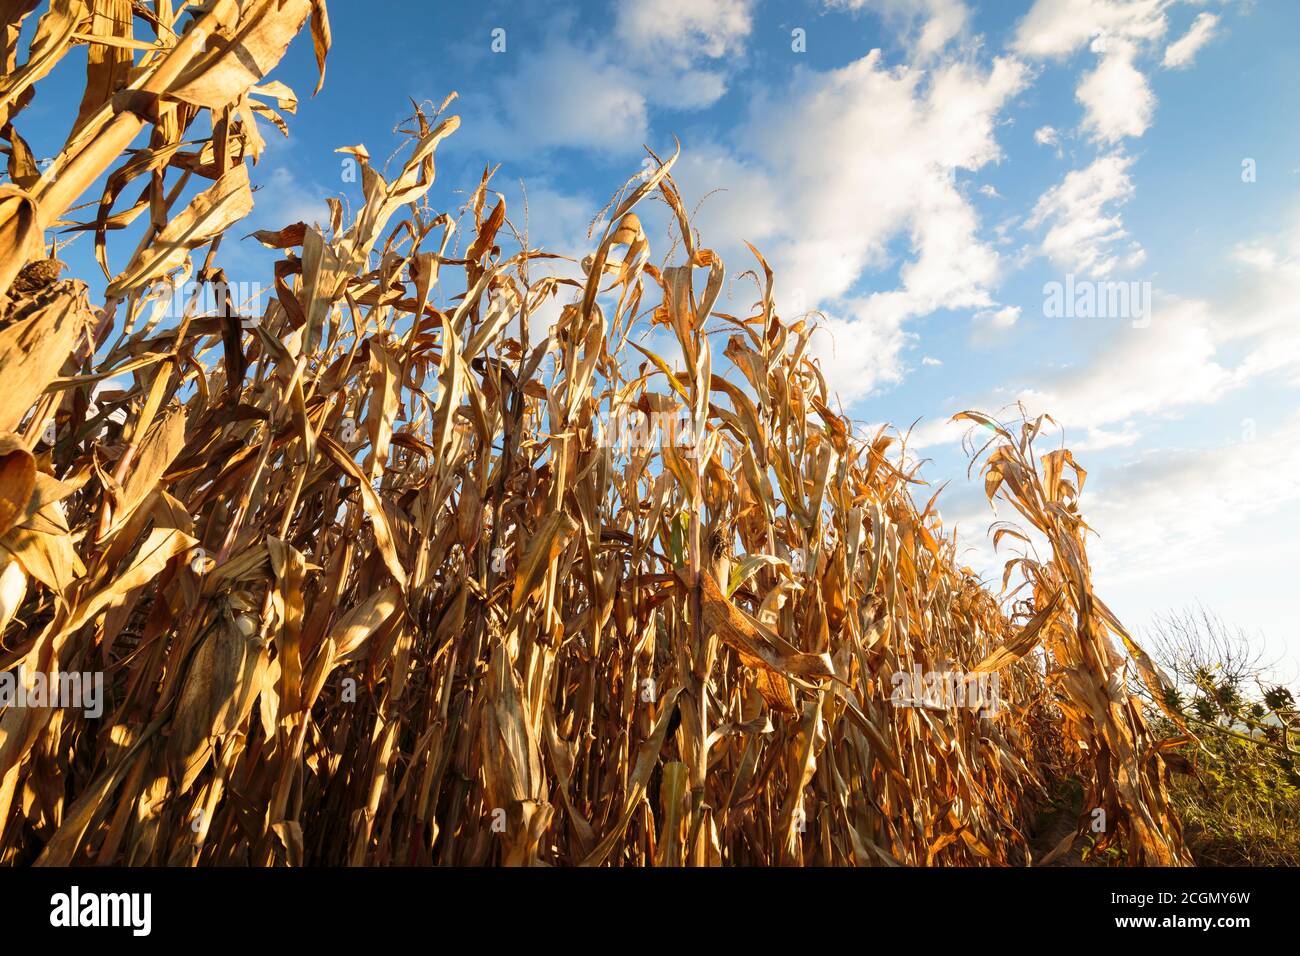 Golden corn plantation with blue sky backgorund. Stock Photo